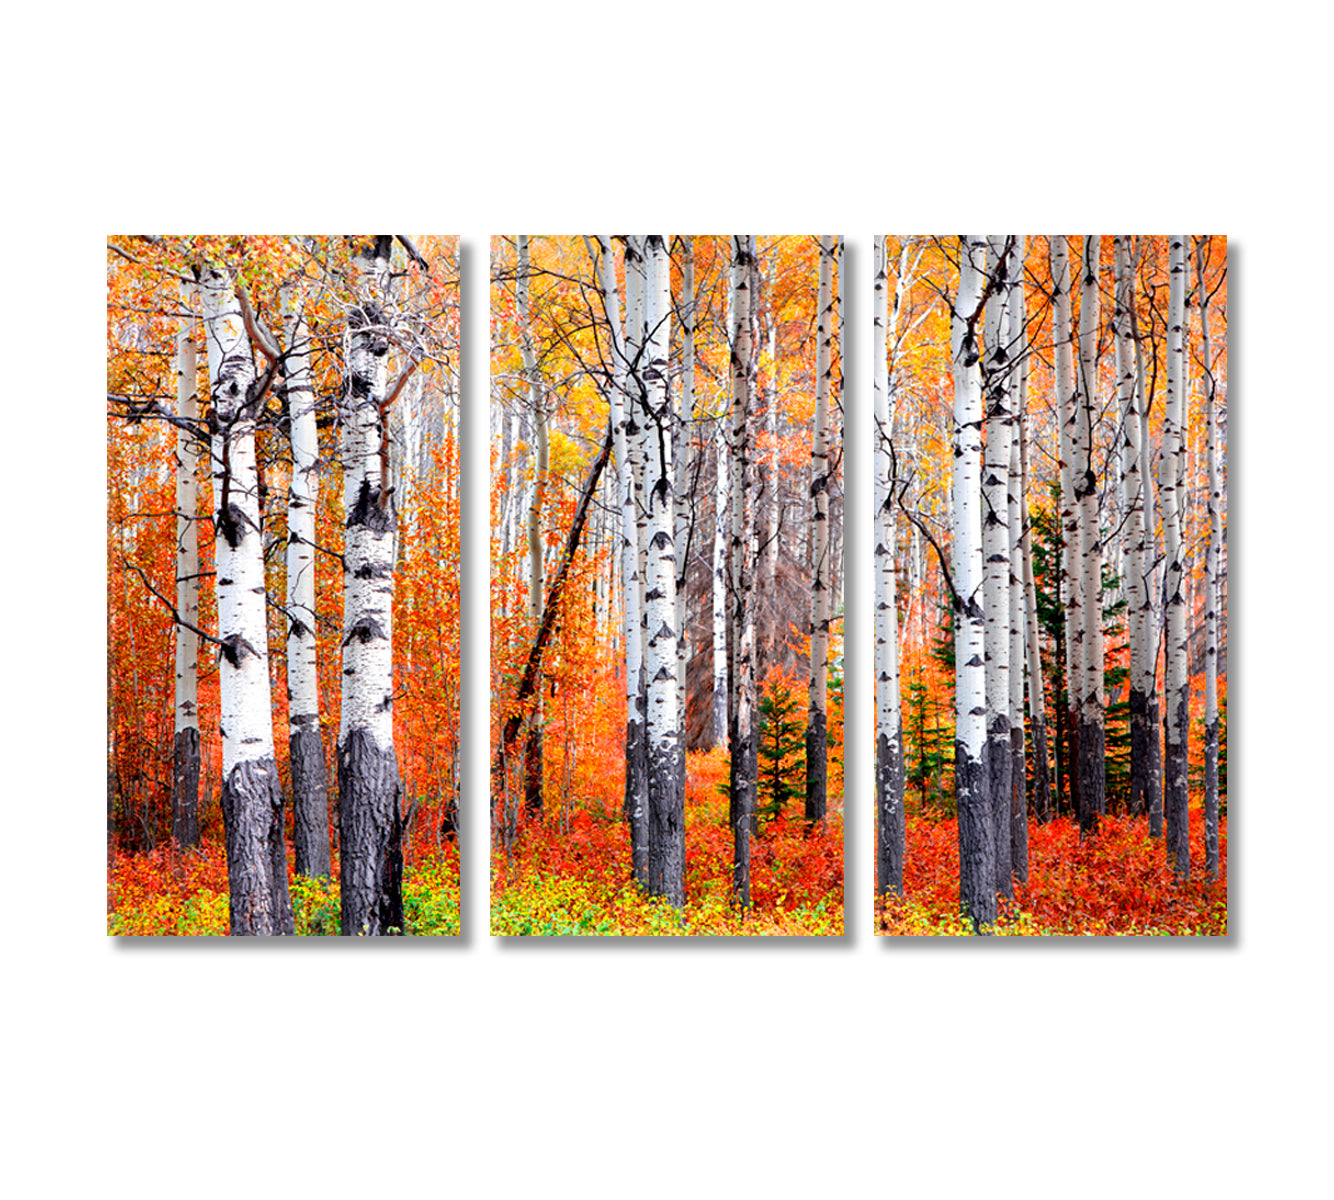 Aspen Trees in Banff National Park in Autumn Canvas Print-Canvas Print-CetArt-3 Panels-36x24 inches-CetArt